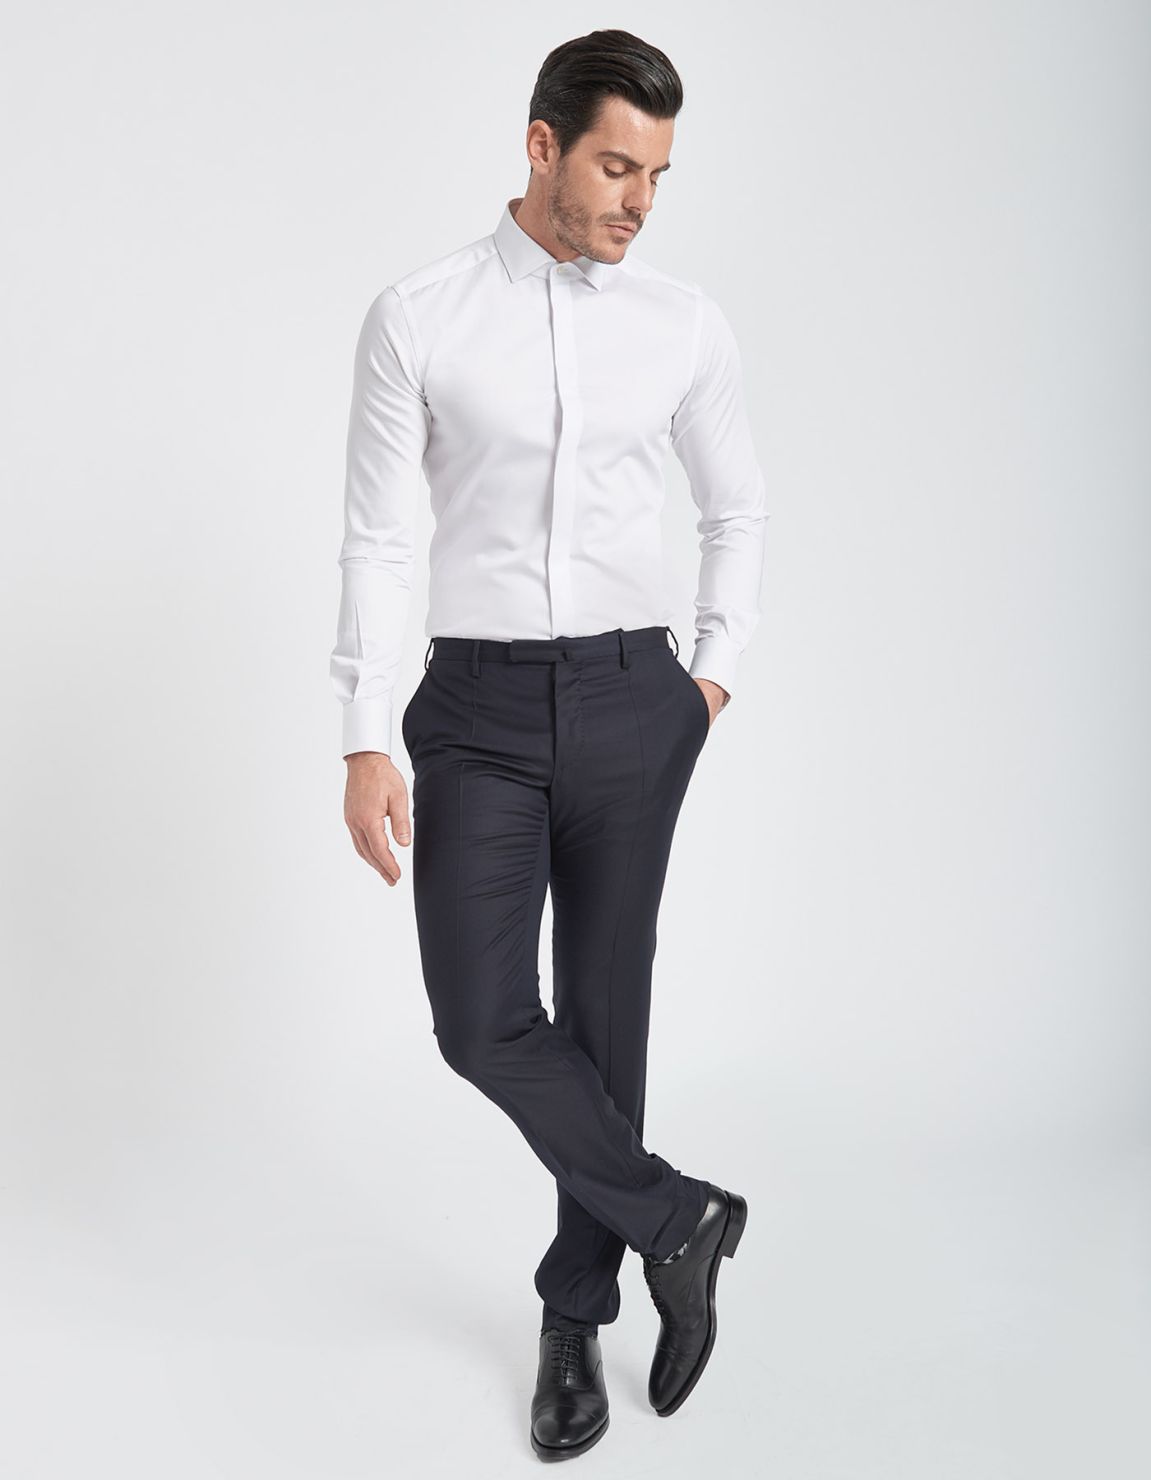 White Canvas Solid colour Shirt Collar cutaway Slim Fit 5